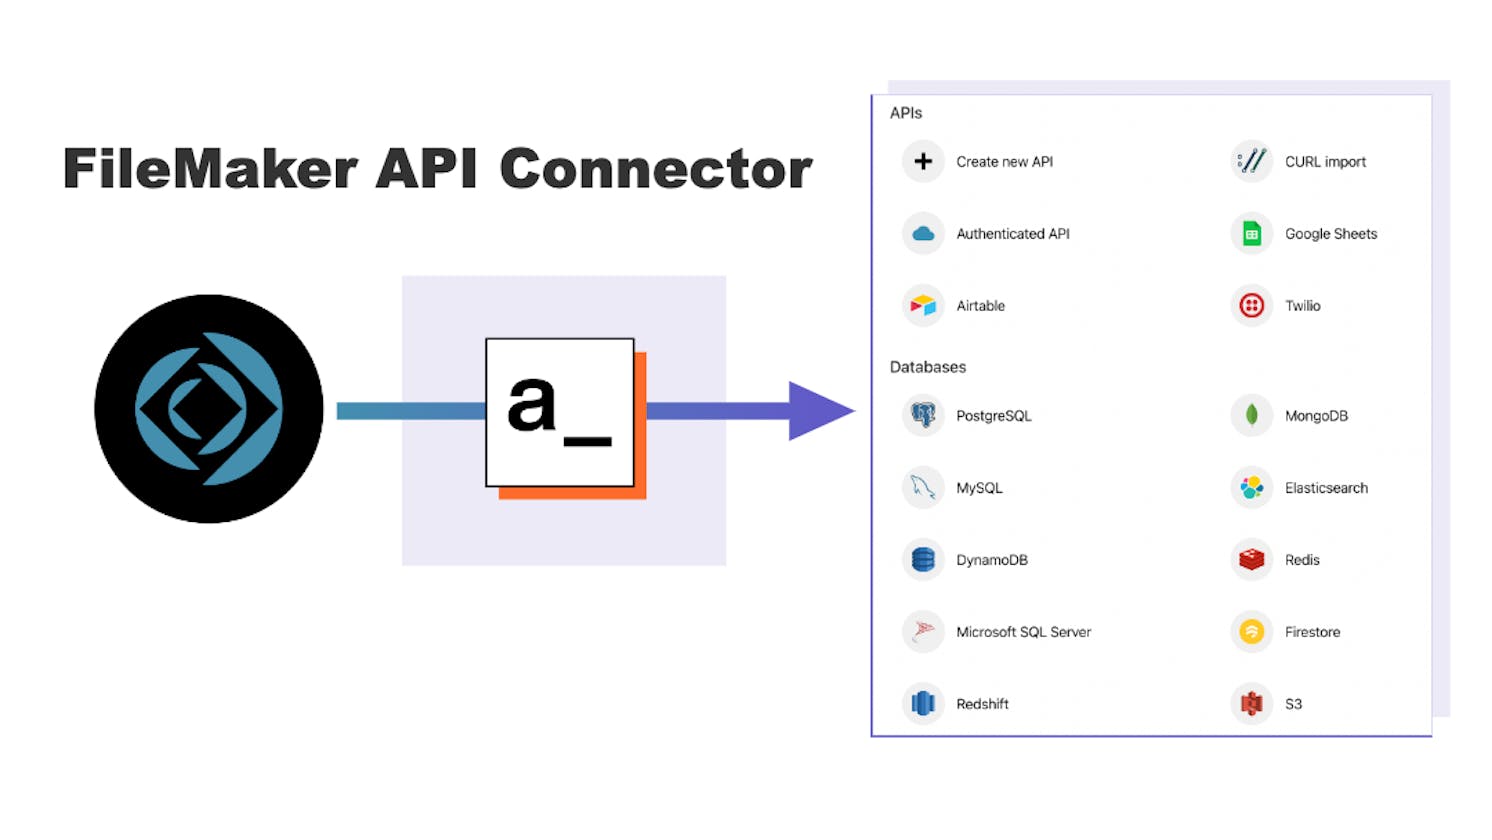 FileMaker API Connector